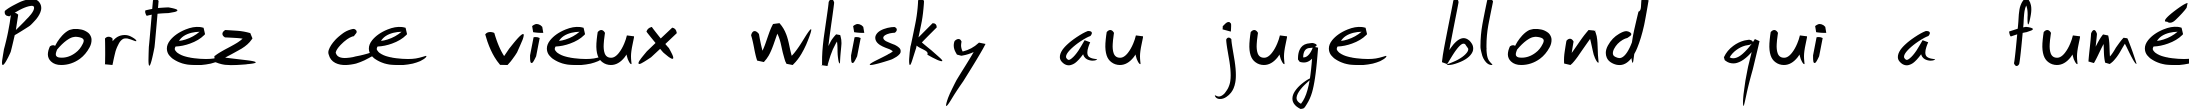 Пример написания шрифтом Royfont текста на французском